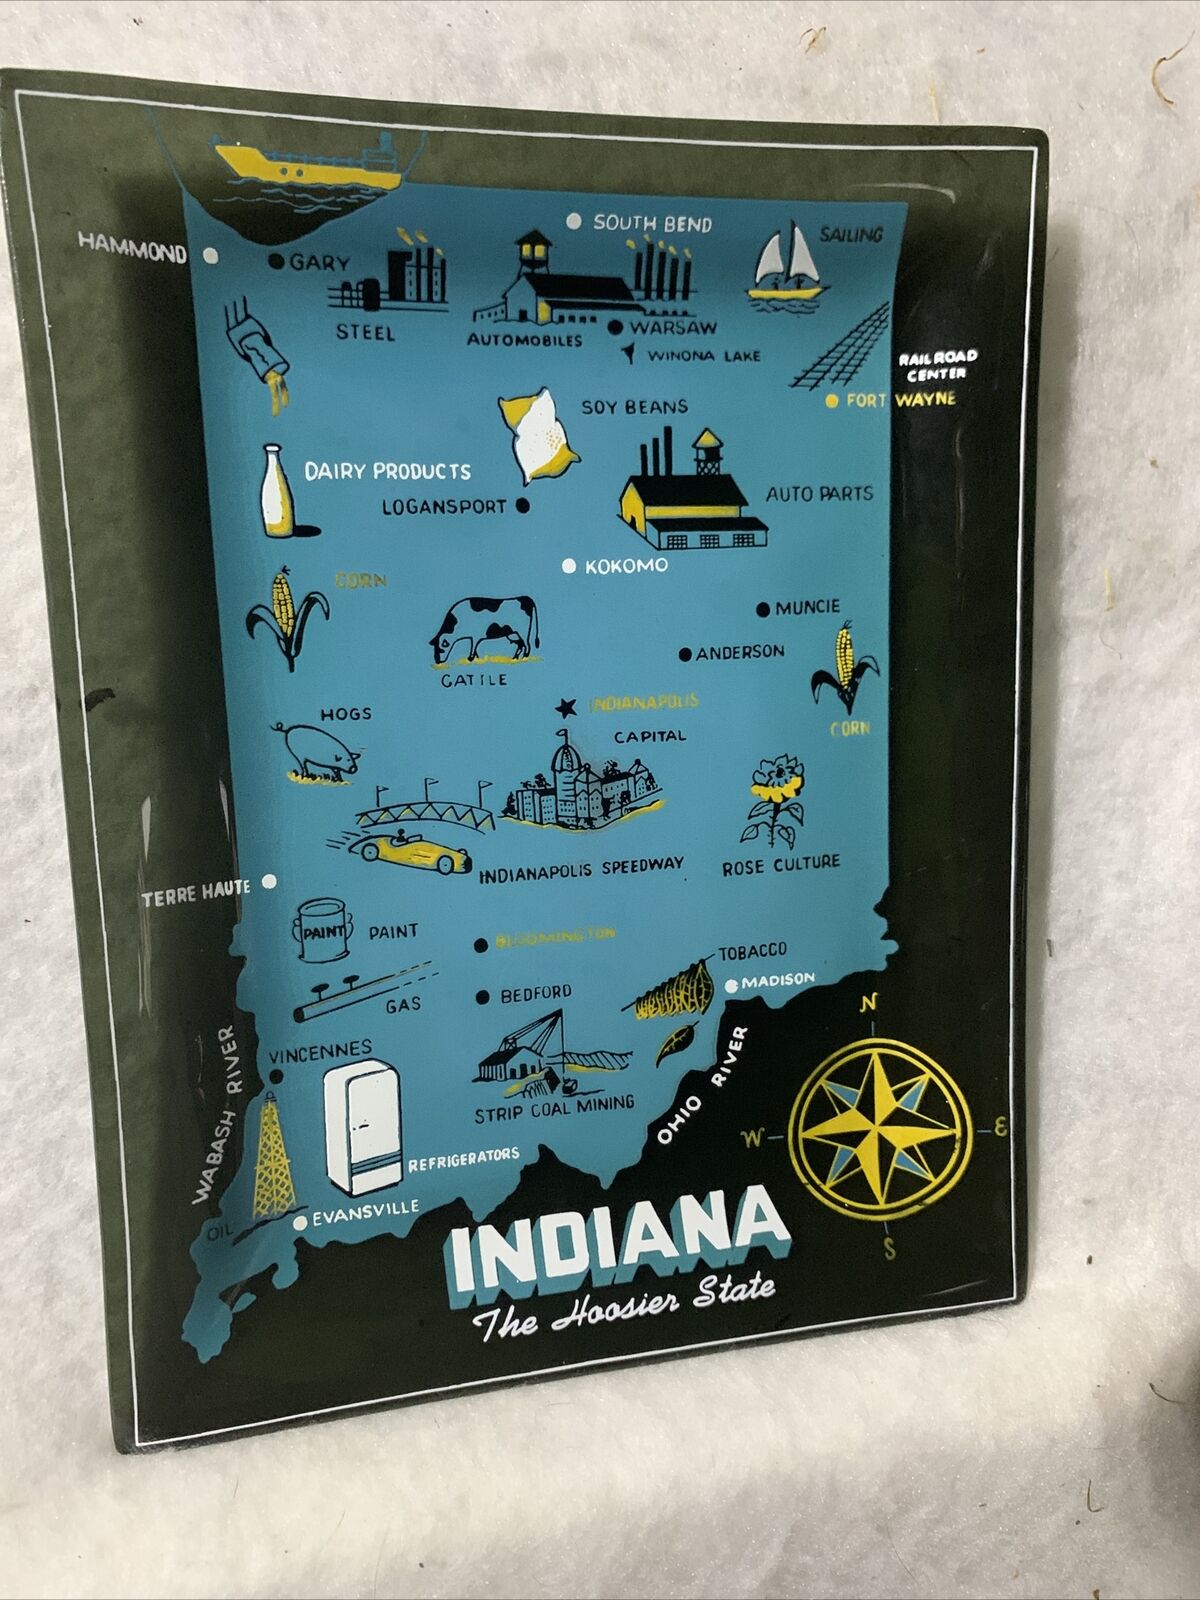 Indiana Hoosier State Vintage Souvenir Tray Glass 9”x7” #2002